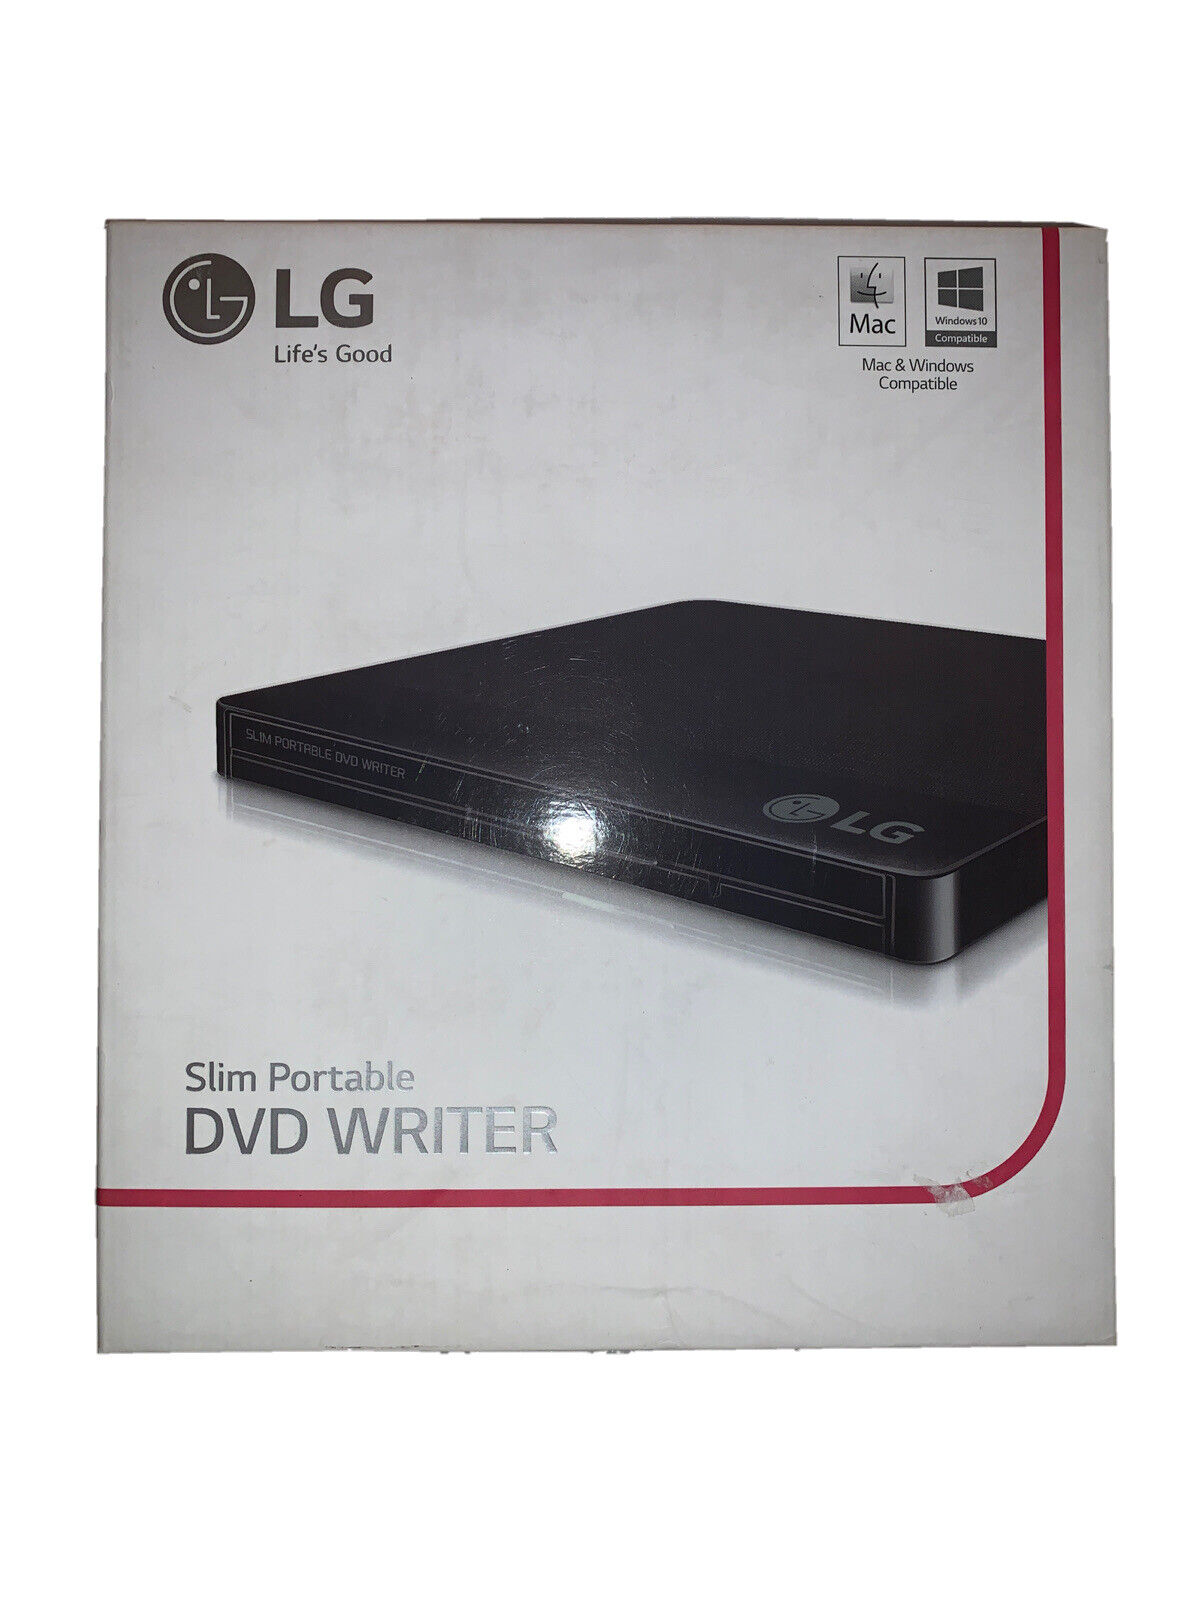 LG Slim Portable DVD Writer GP50 Brand New In Box -Windows and Mac Compatible